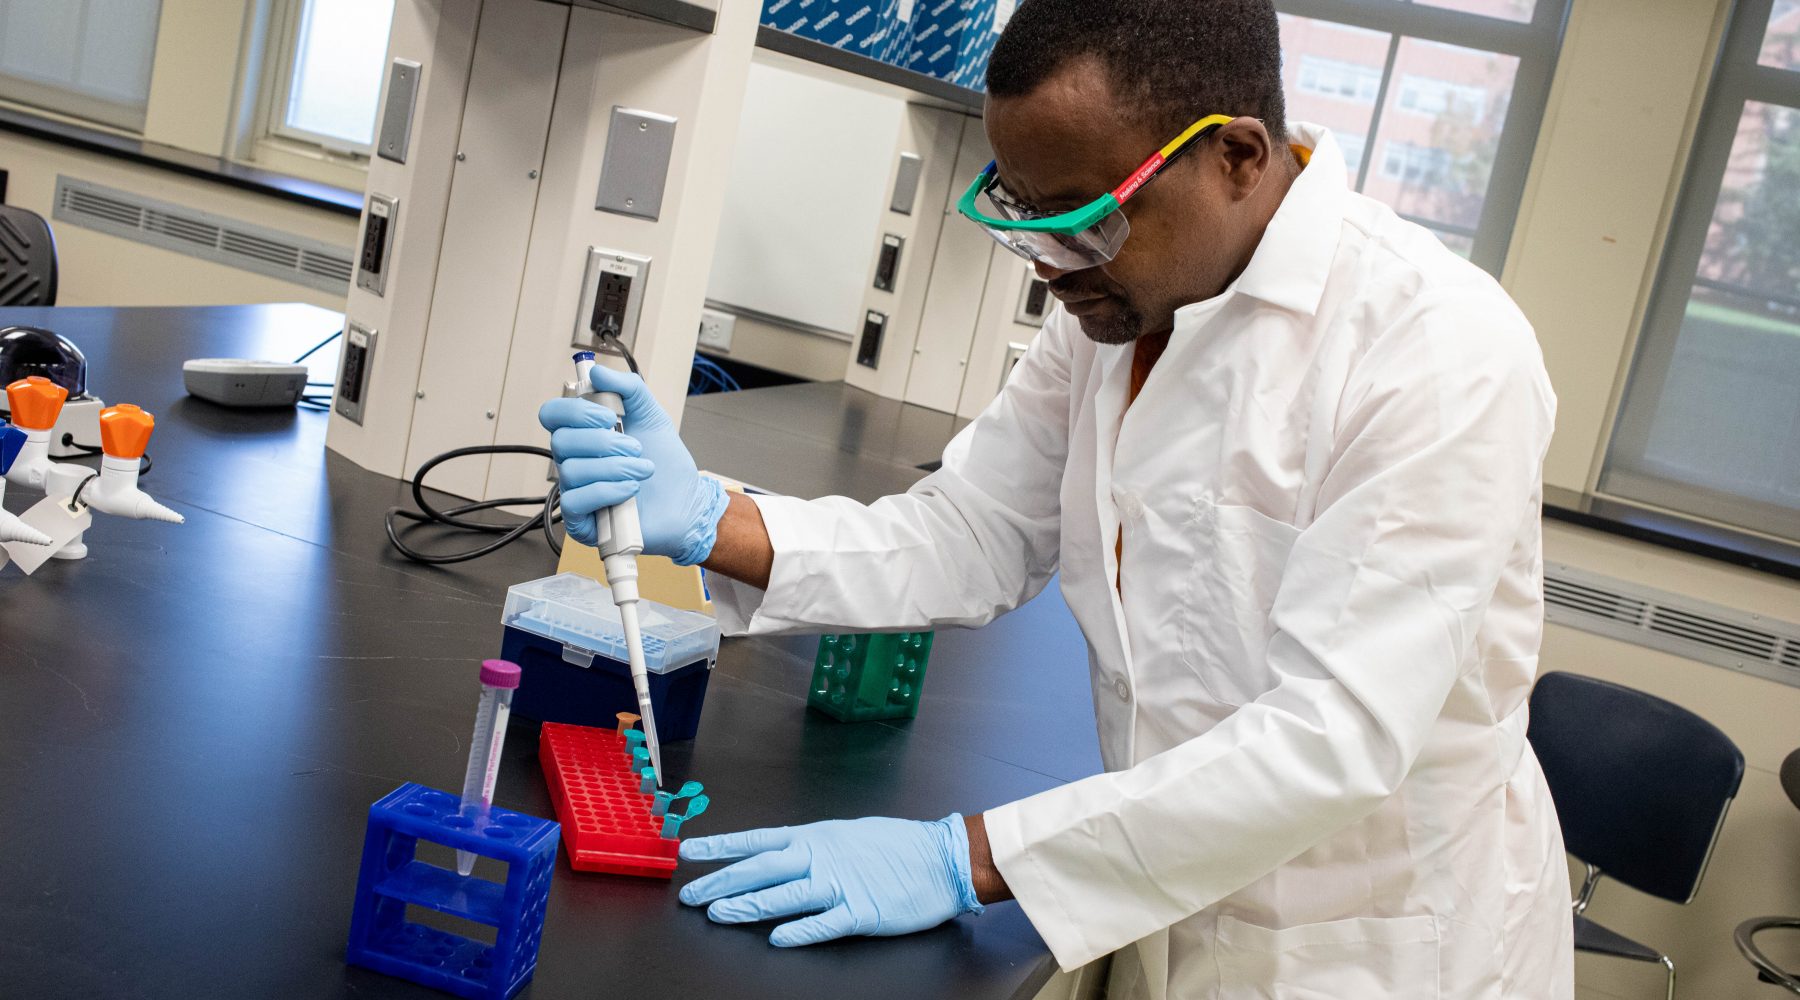 Man in lab coat performs lab work.